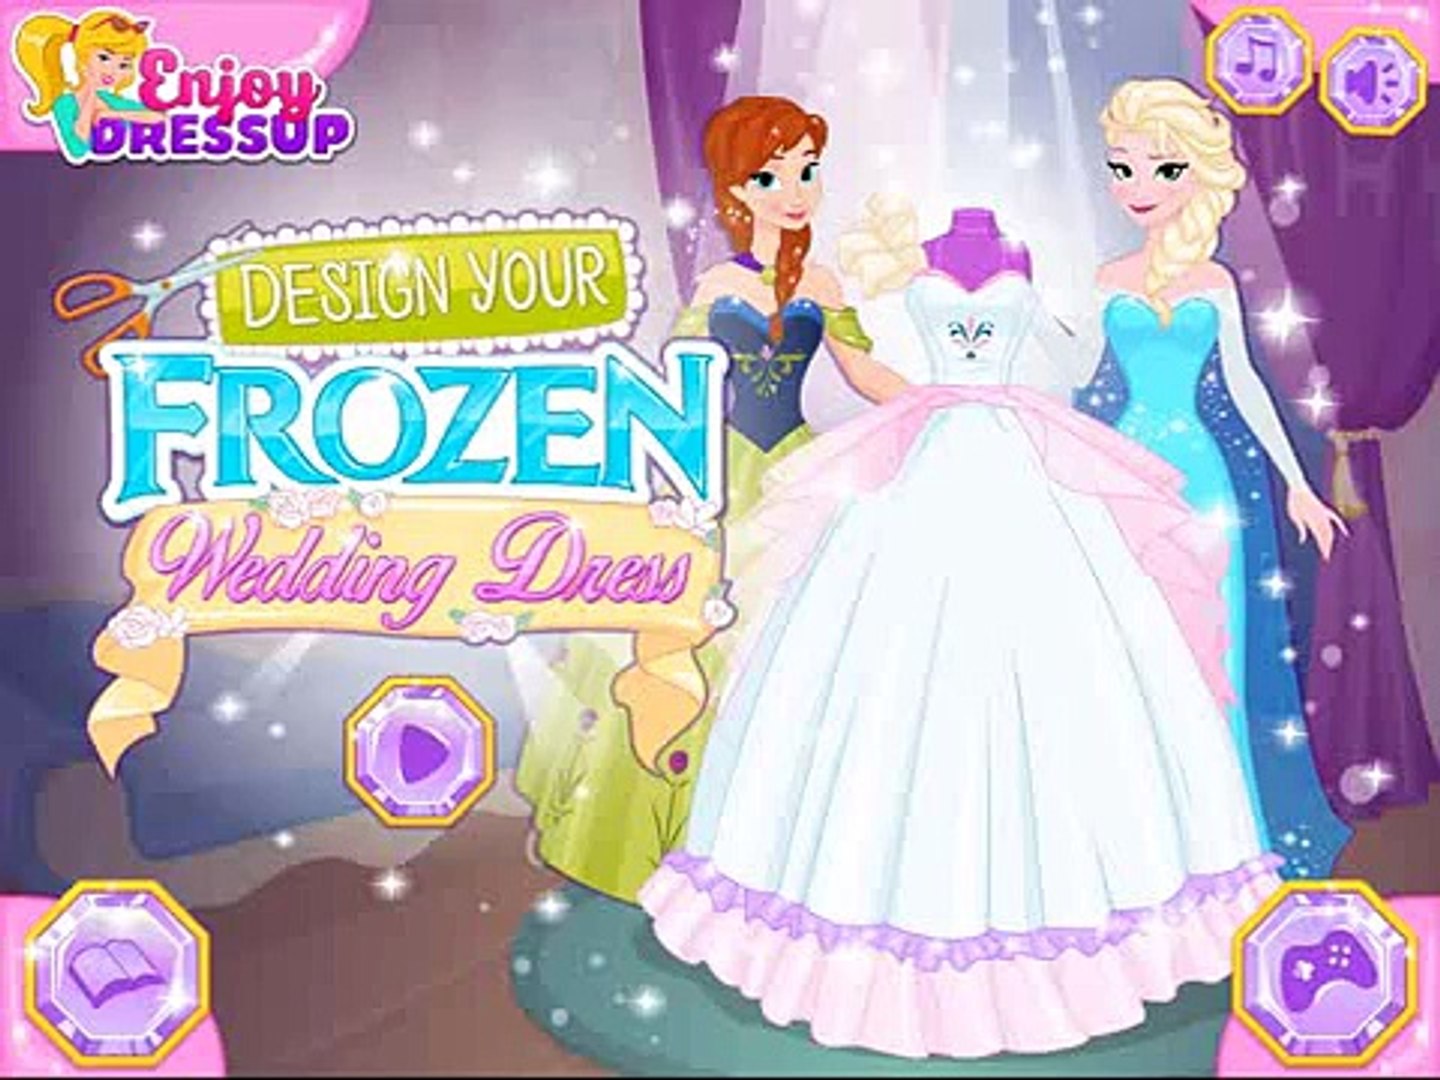 Frozen Design Wedding Dress Video Walkthrough - video Dailymotion